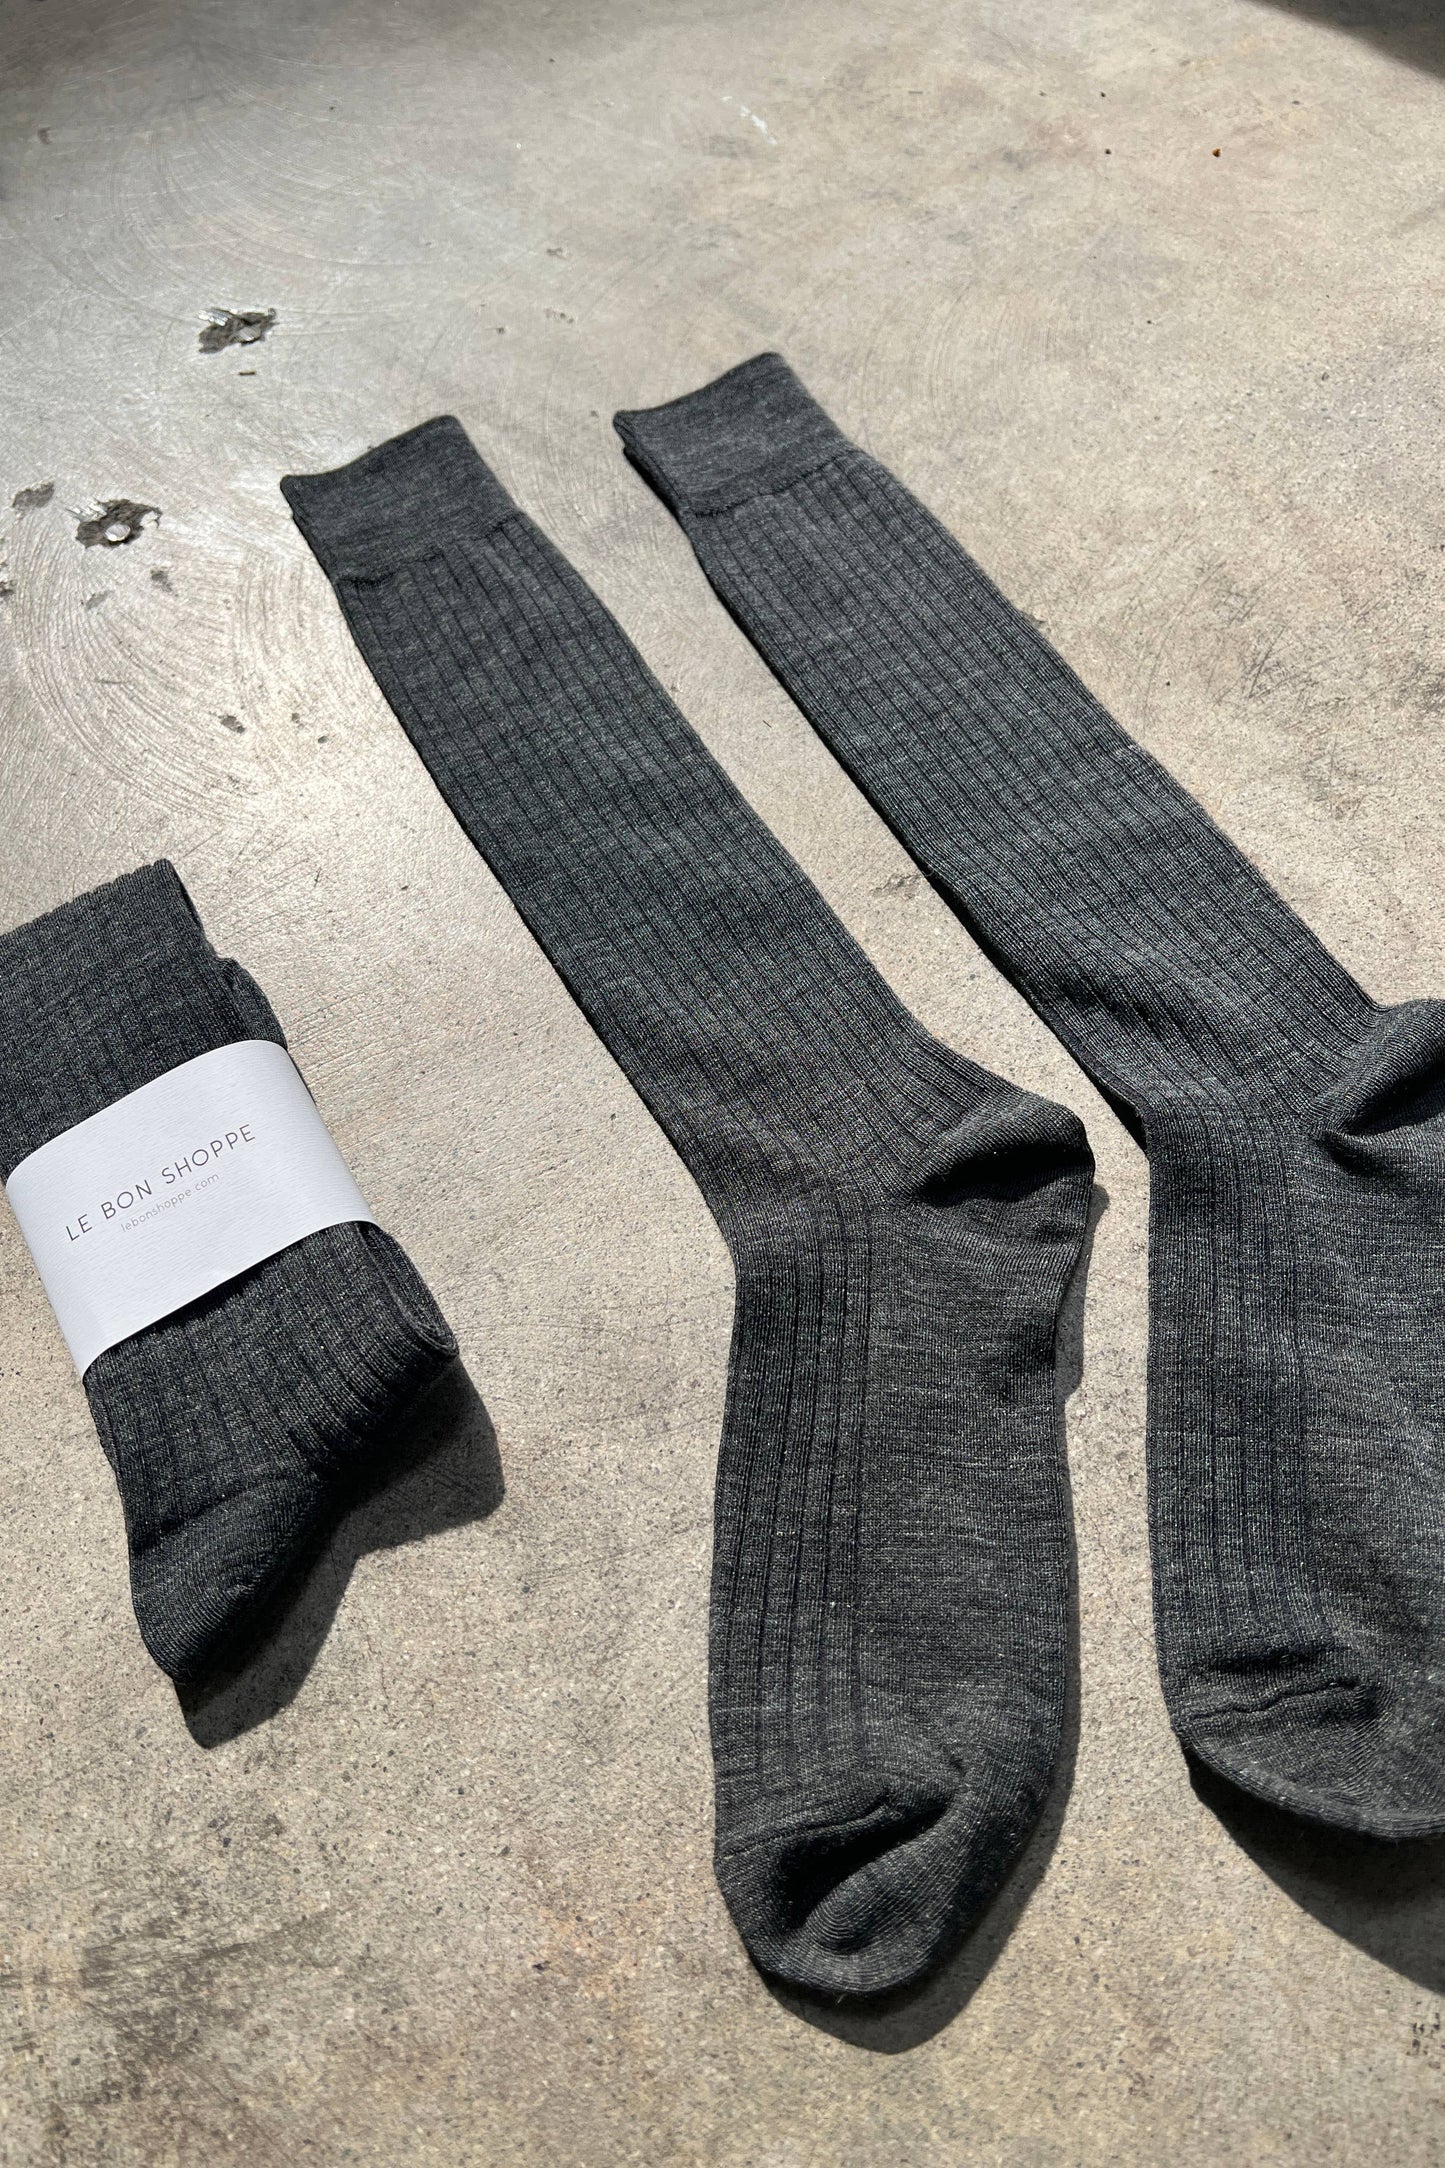 Schoolgirl Socks, Merino Wool Blend, Charcoal Melange